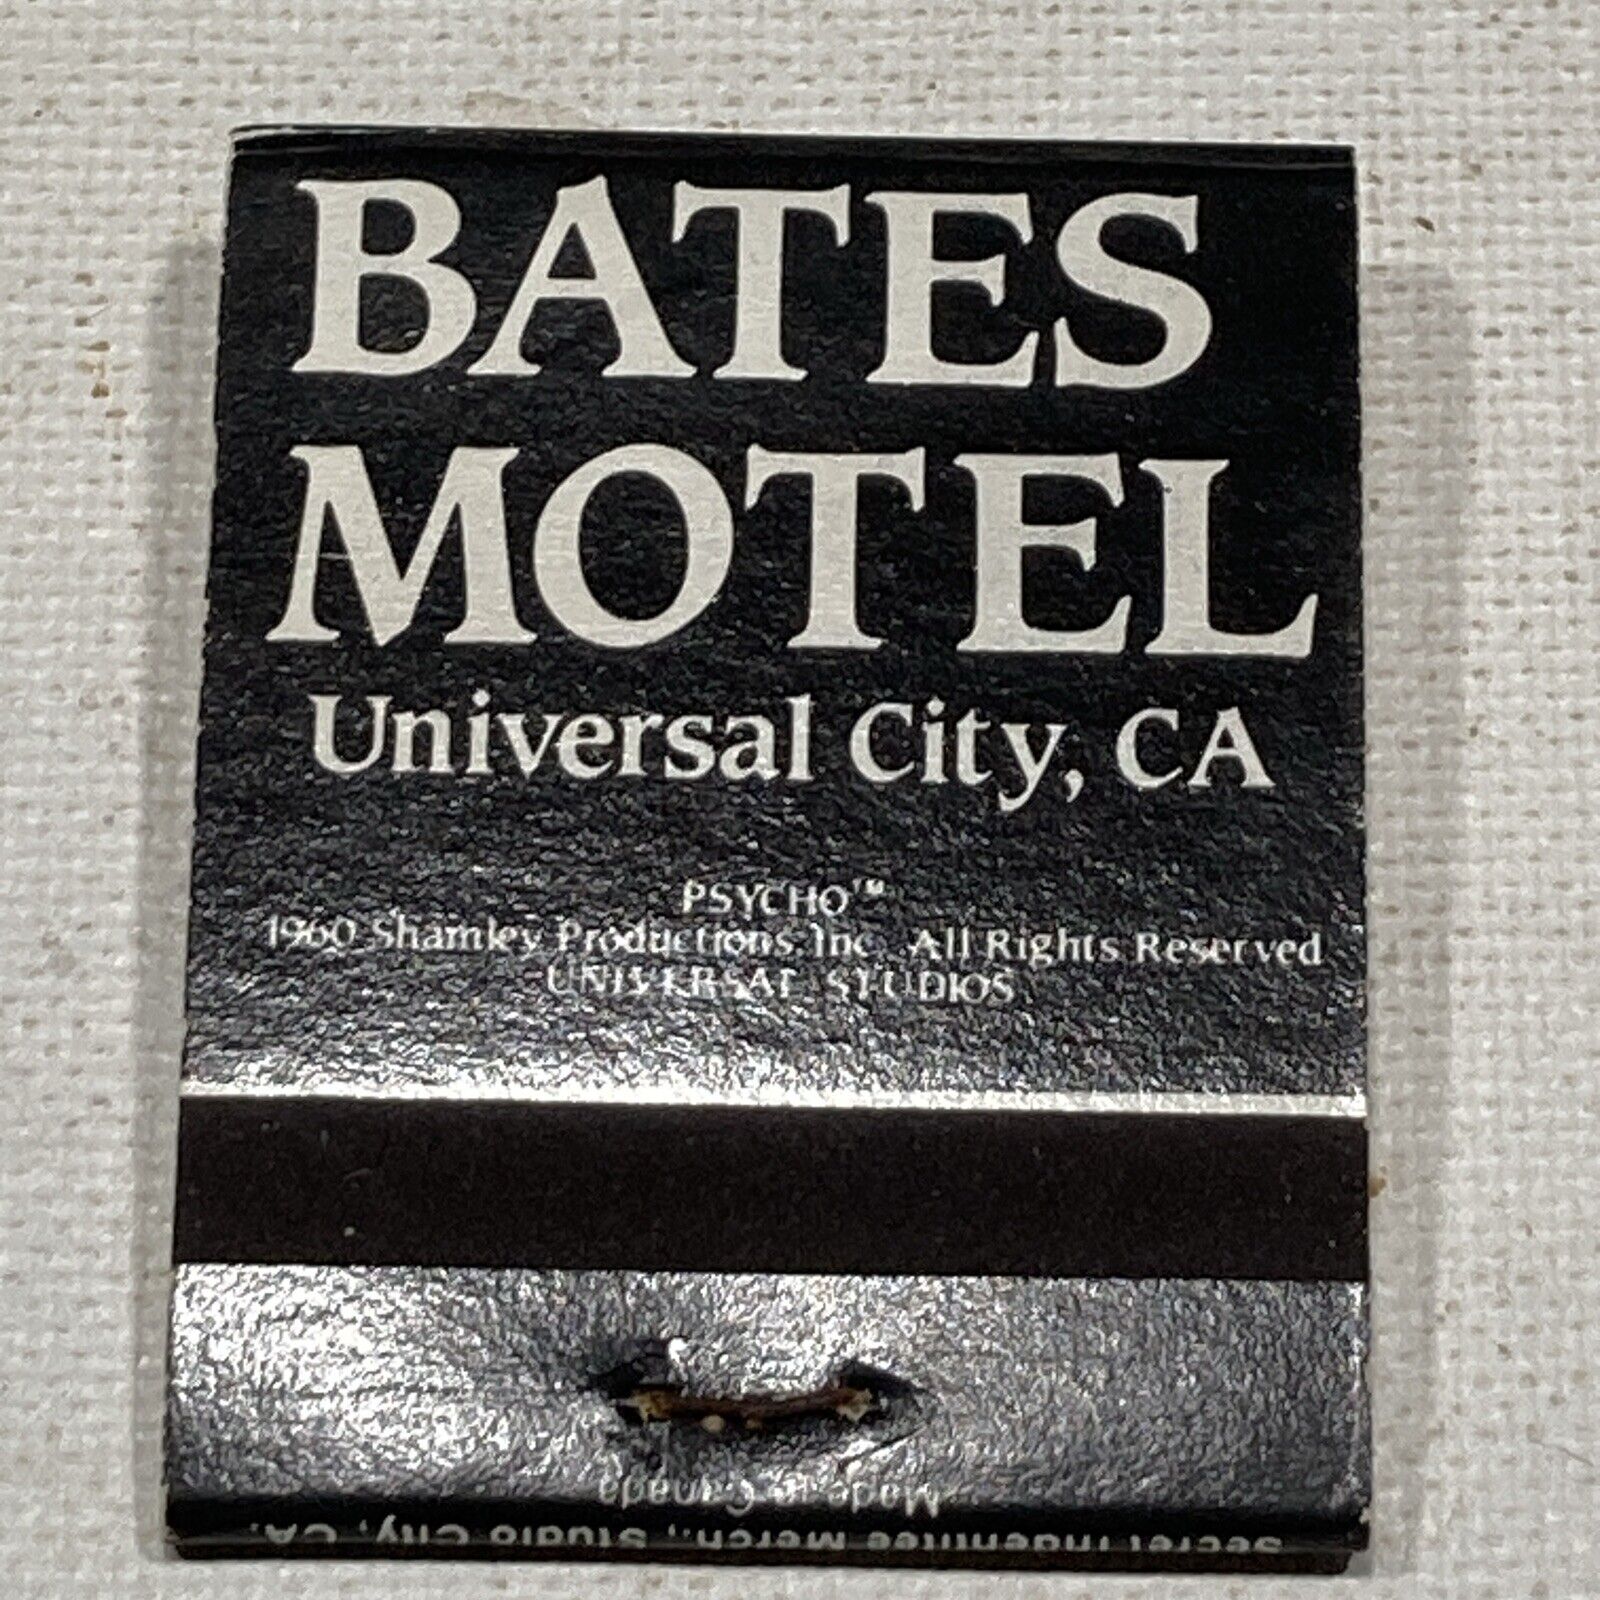 Vintage 1960 BATES MOTEL Advertising Matchbook Universal City, CA Psycho